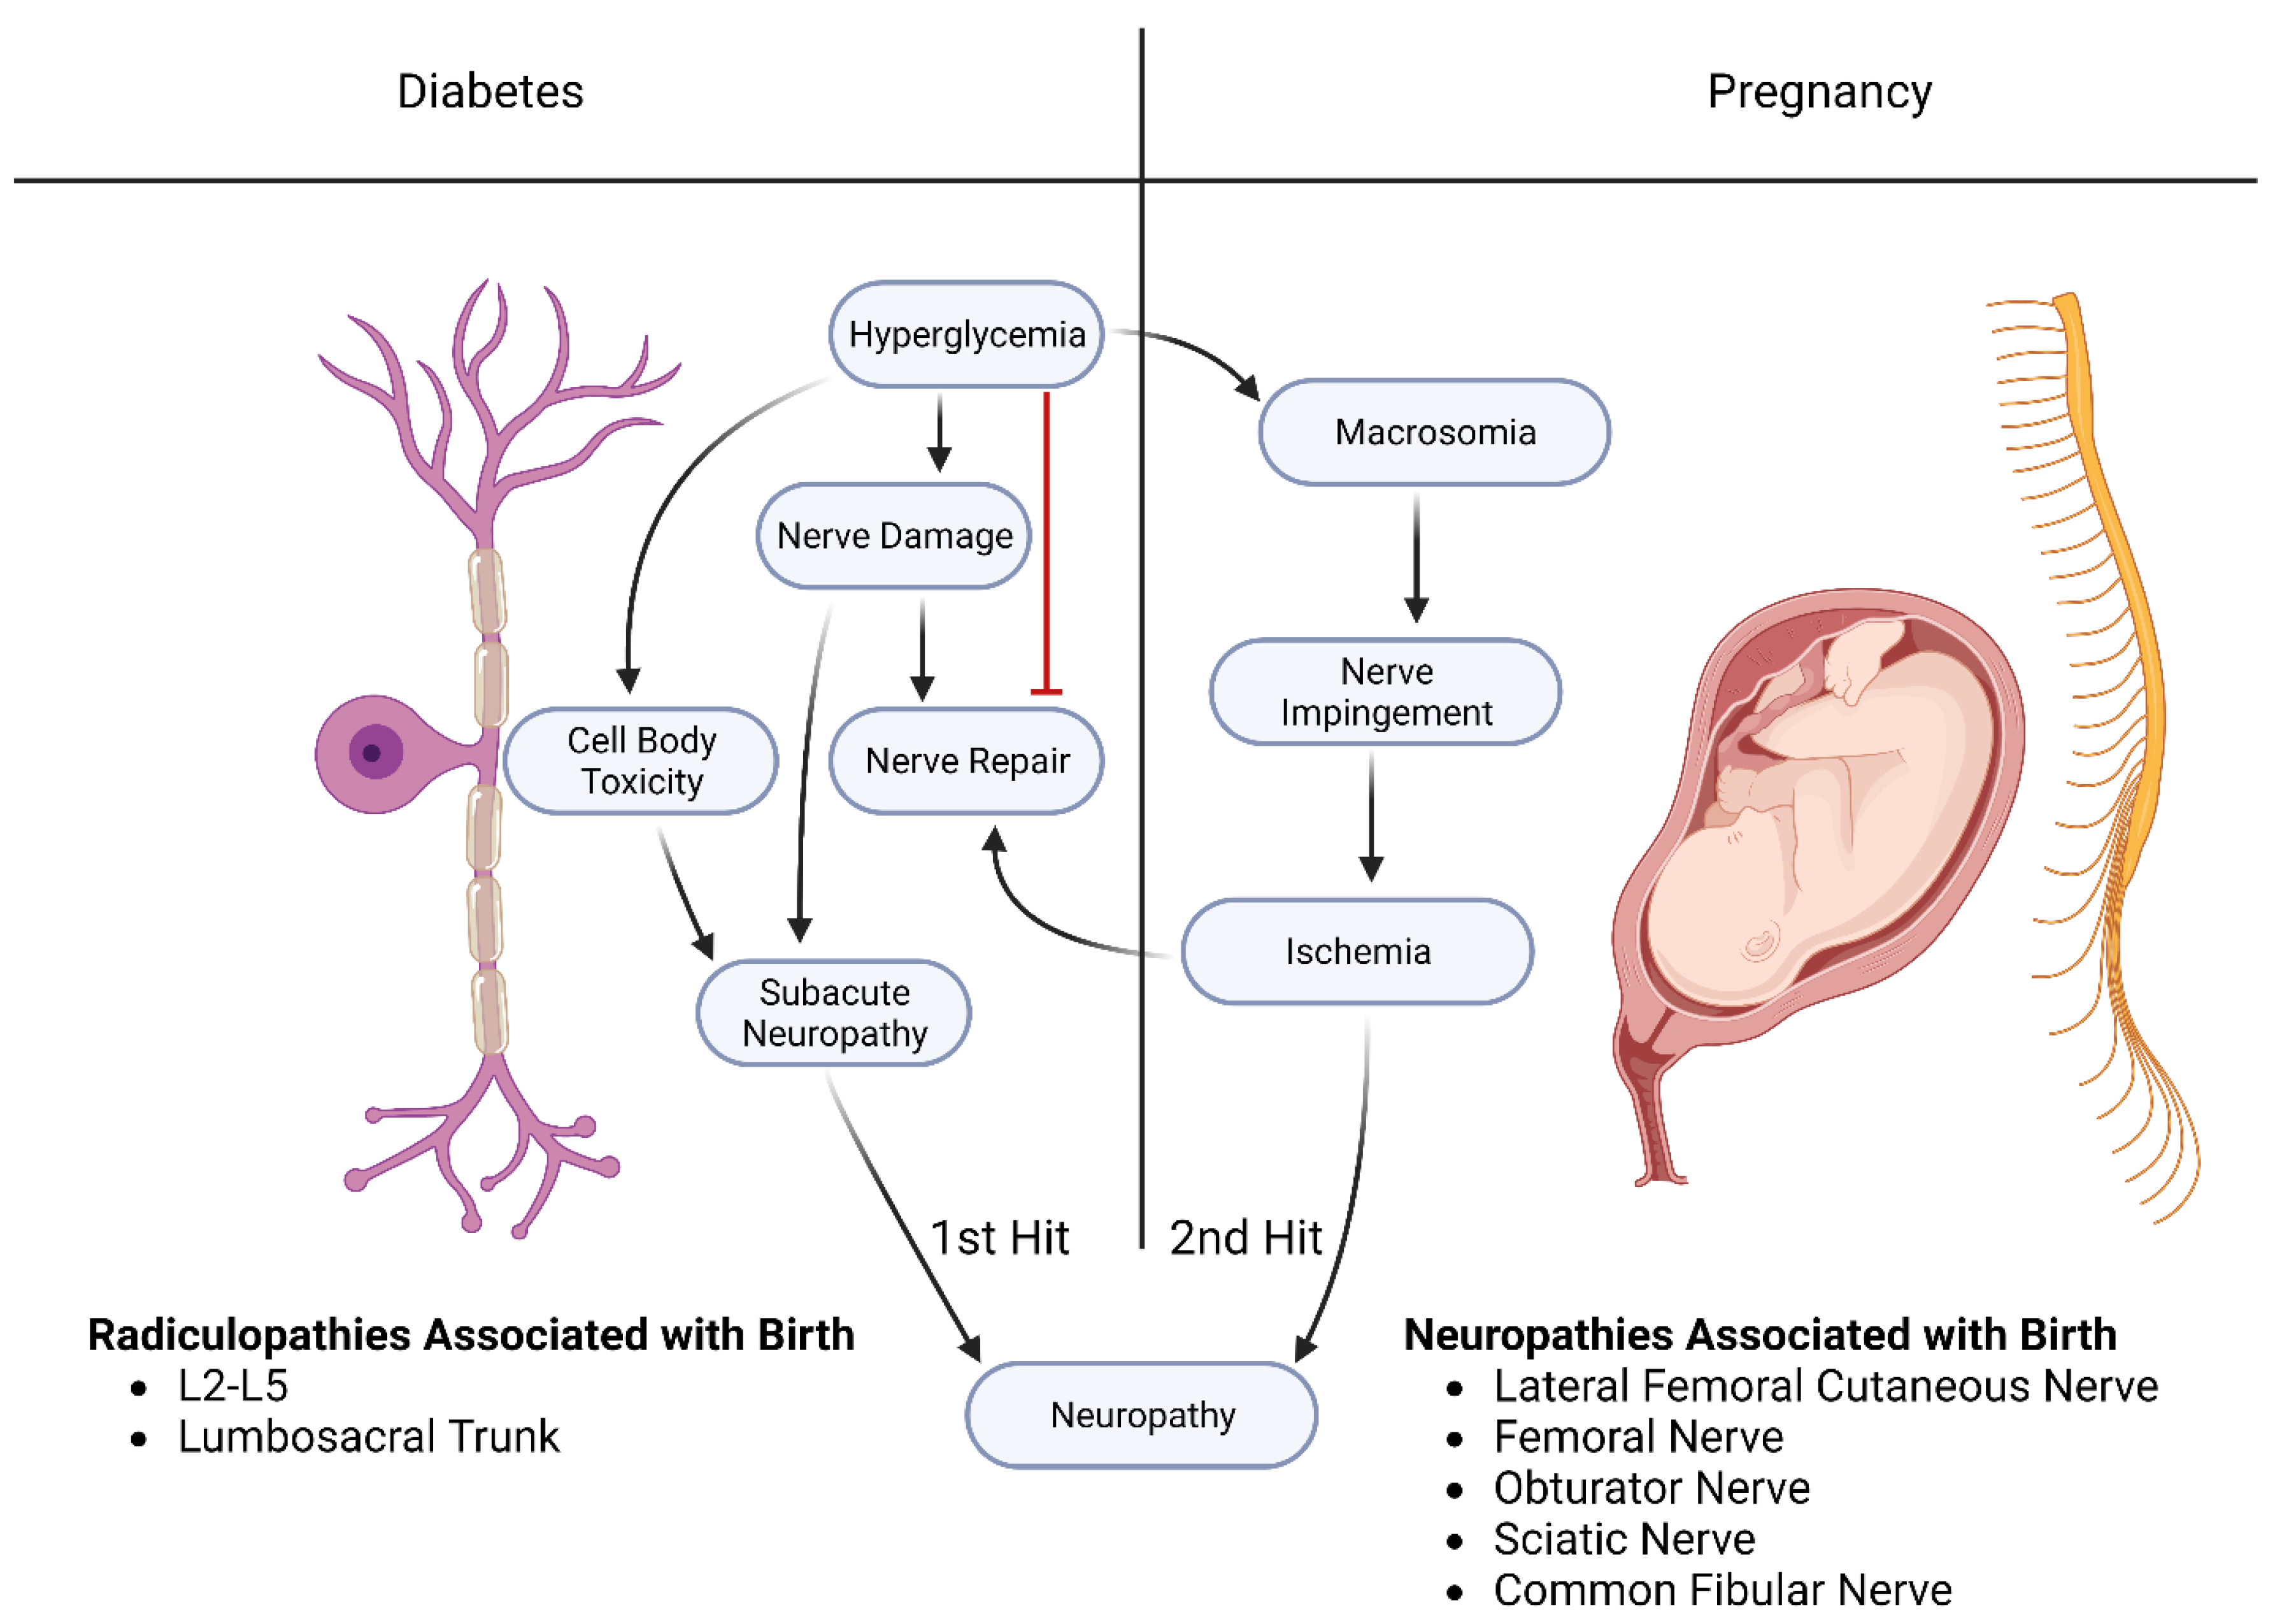 Diabetic neuropathy and pregnancy